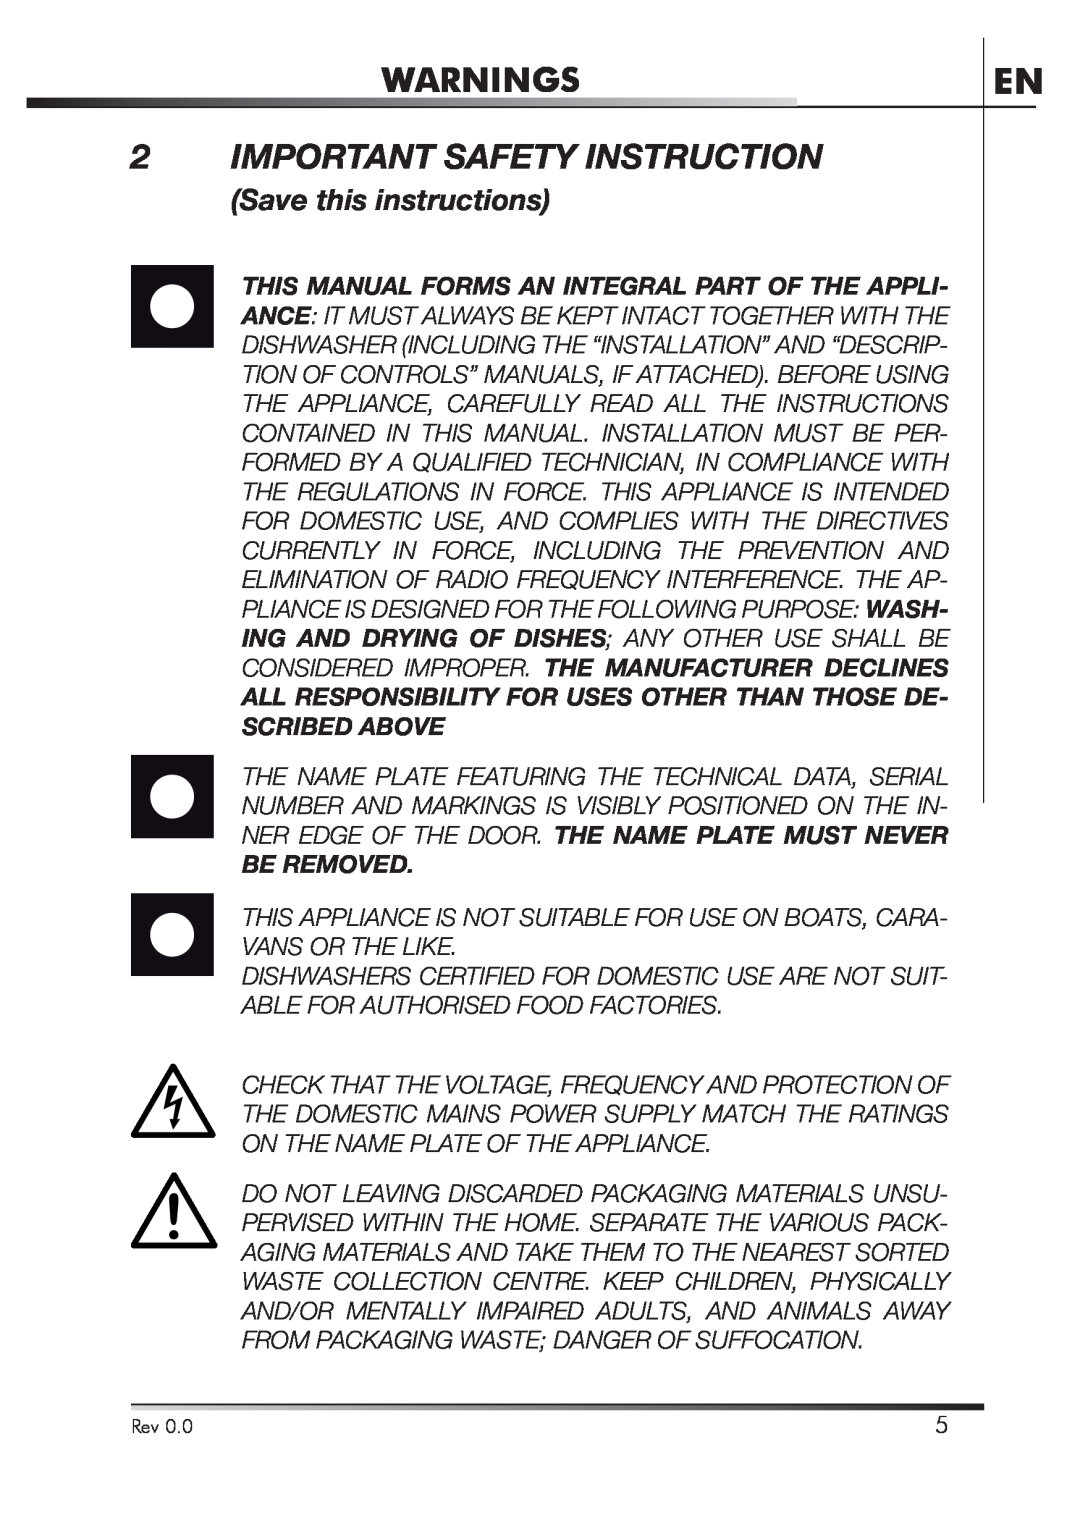 Smeg STA4645U manual Warnings, Important Safety Instruction, Save this instructions 